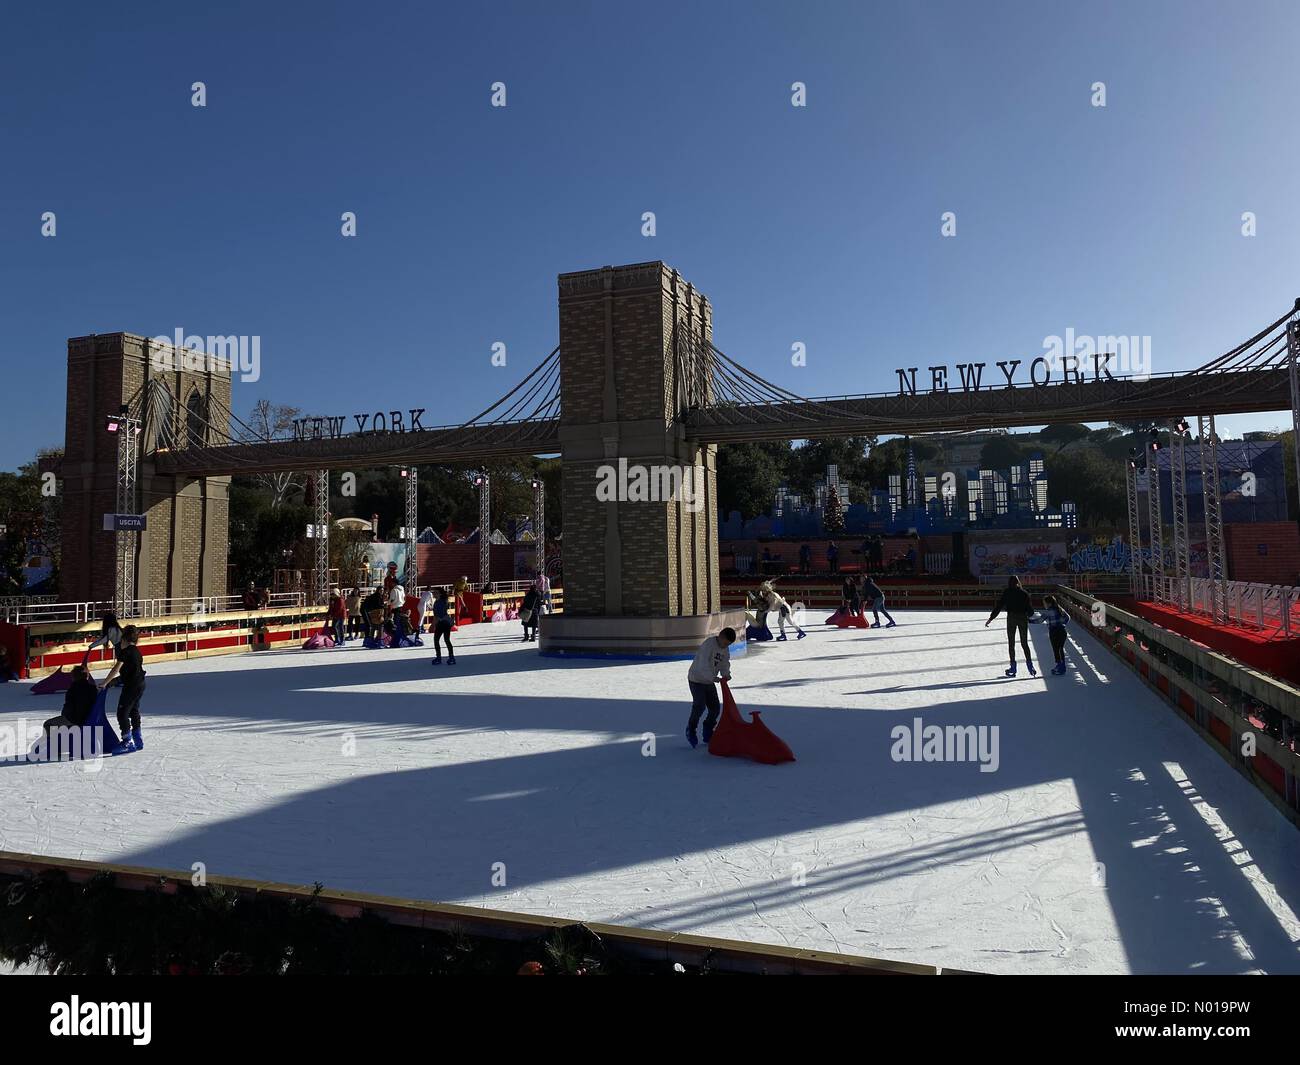 Christmas World Theme Park, Rome, Italie crédit : amer ghazzal/StockimoNews/Alamy Live News Banque D'Images